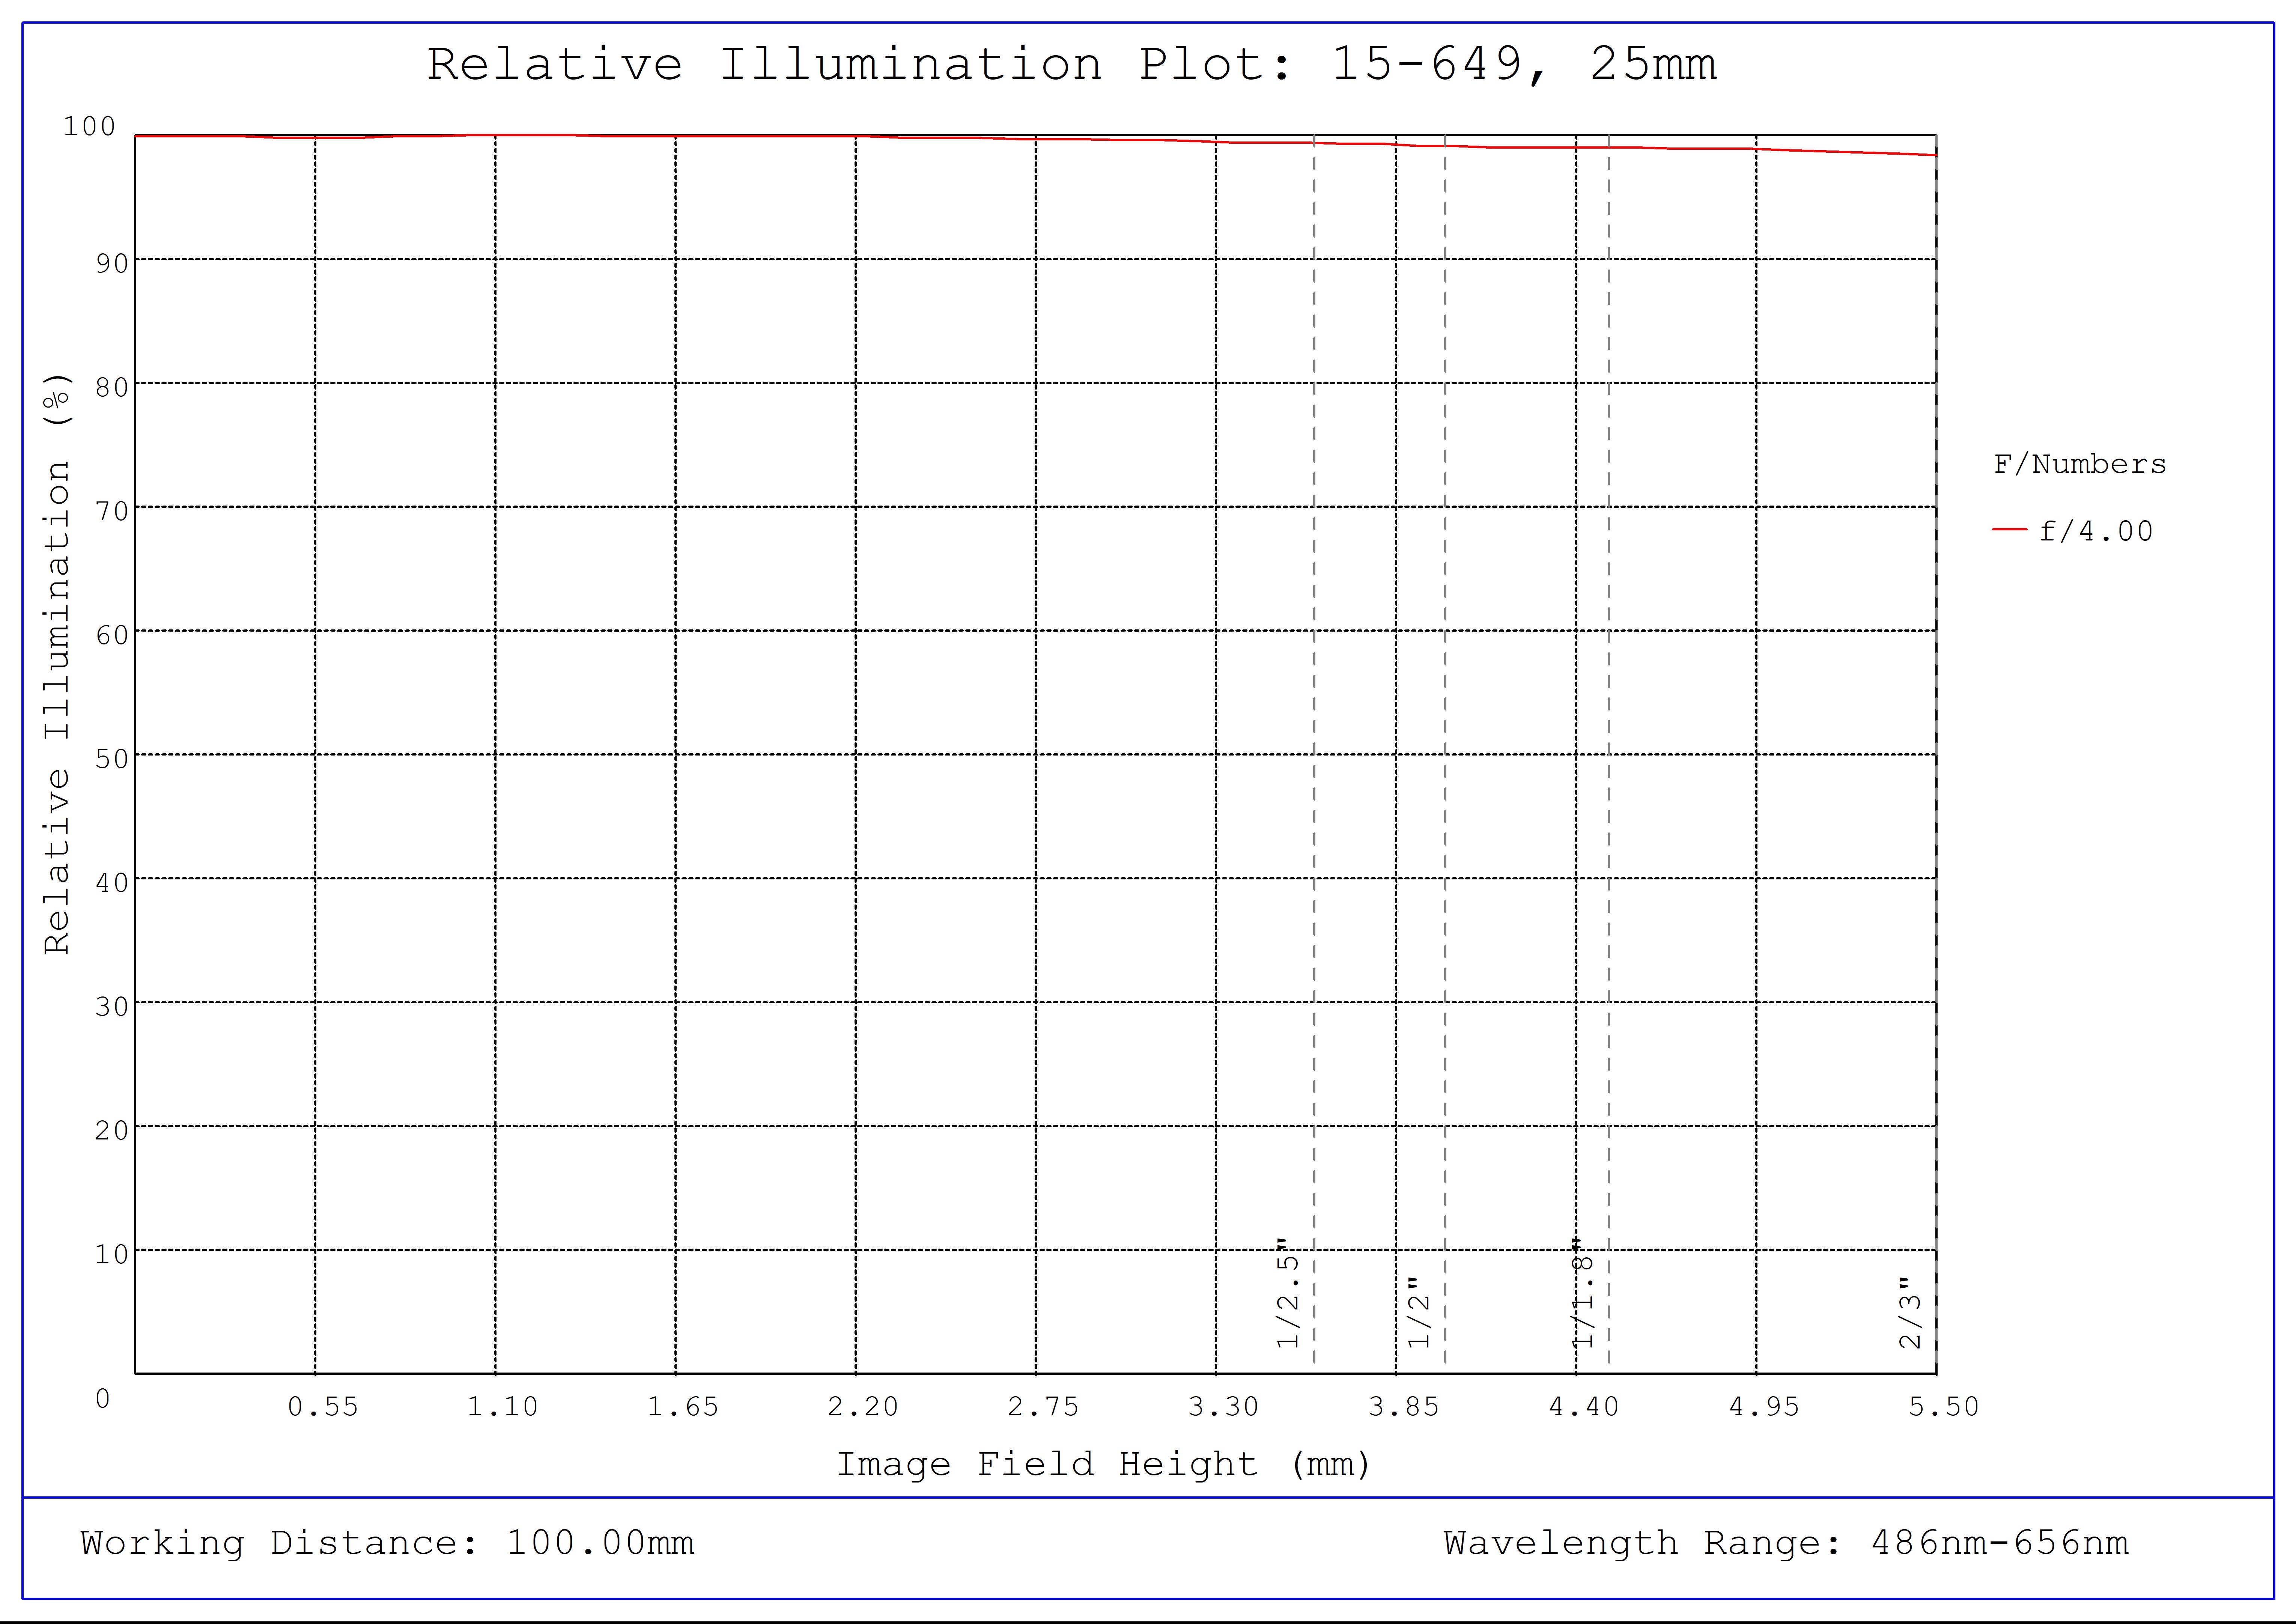 #15-649, 25mm, f/4 Cw Series Fixed Focal Length Lens, Relative Illumination Plot